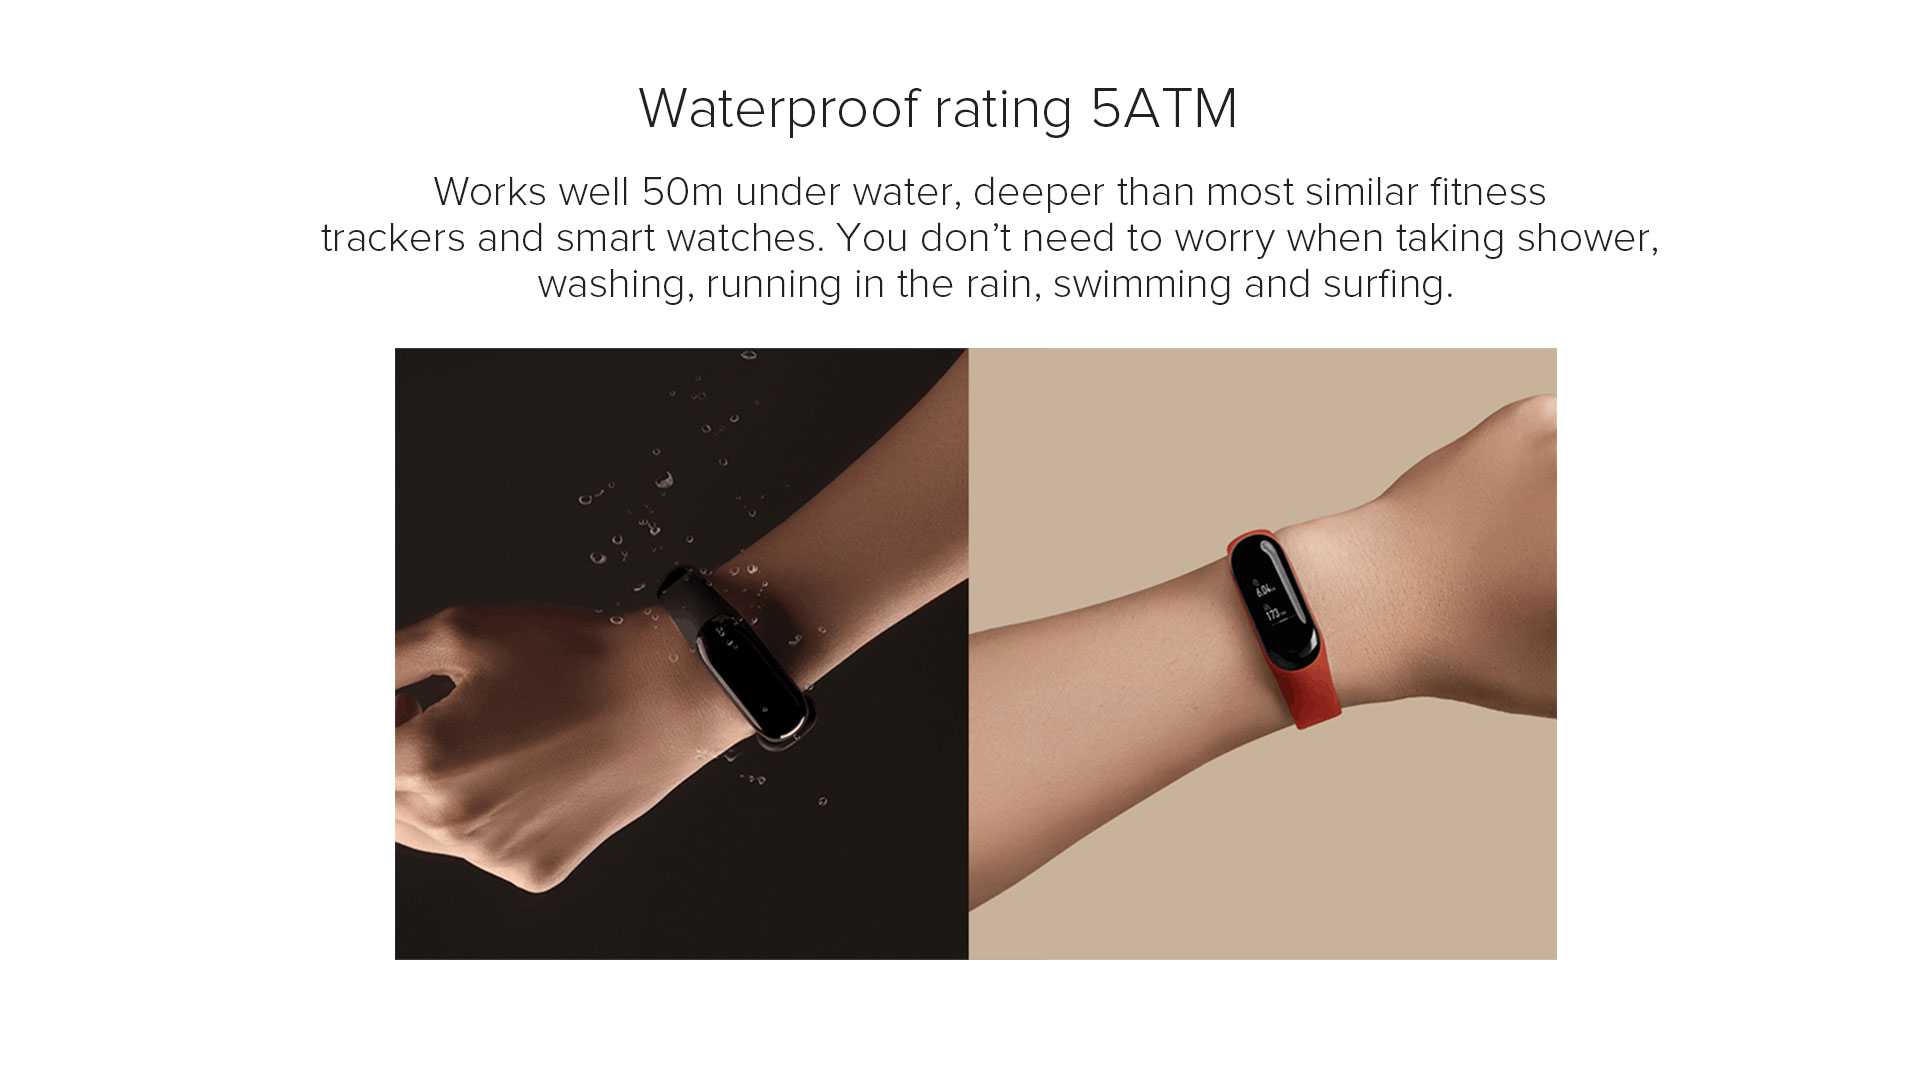 Xiaomi Mi band 4 Smart Wristband Fitness